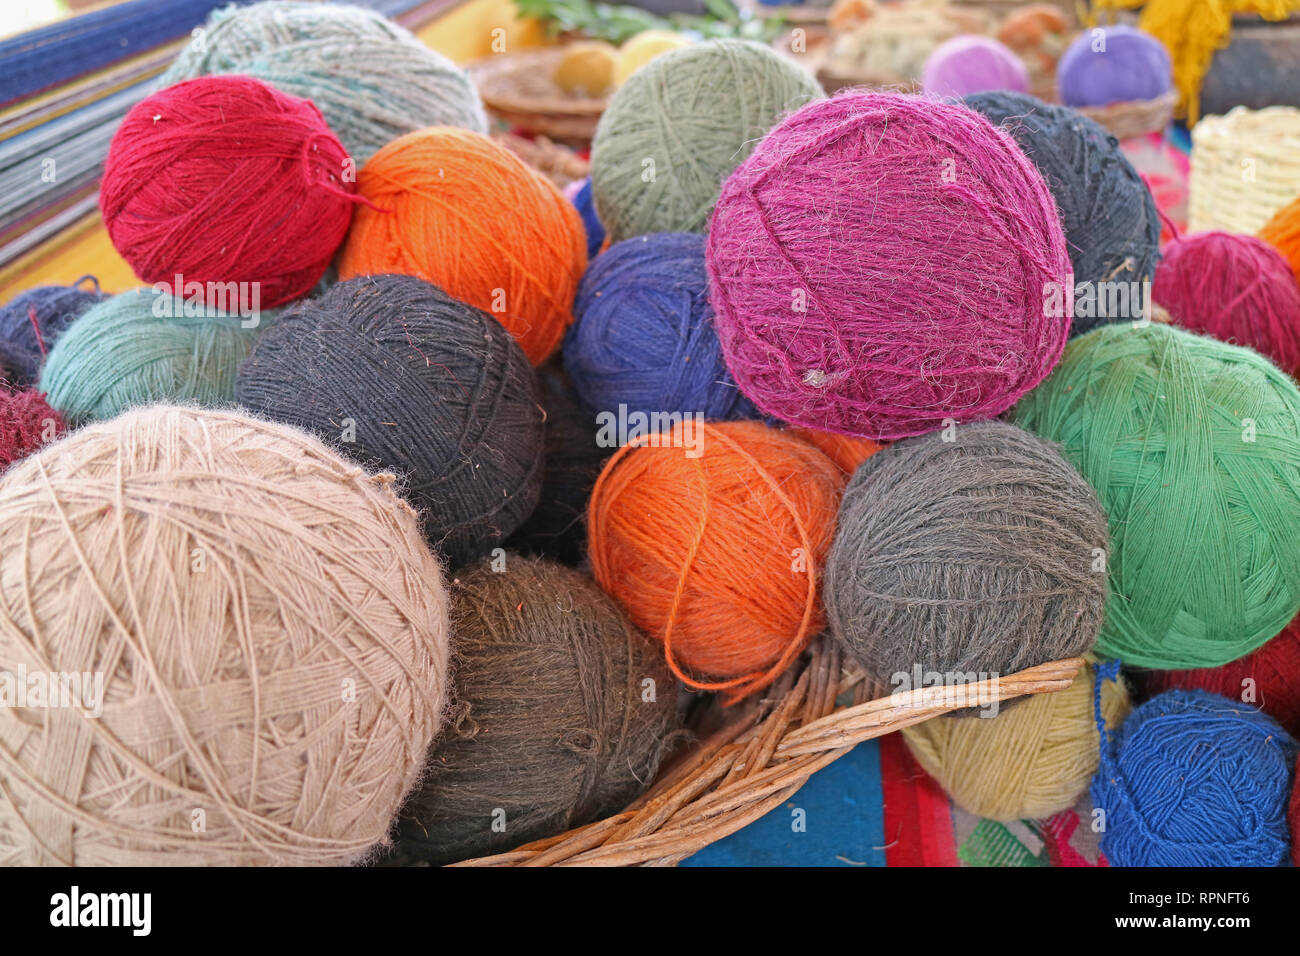 Yarn Balls Balls Colored Yarn Wicker Dish Yarn Knitting Beige Stock Photo  by ©nazarov.dnepr@gmail.com 576268278